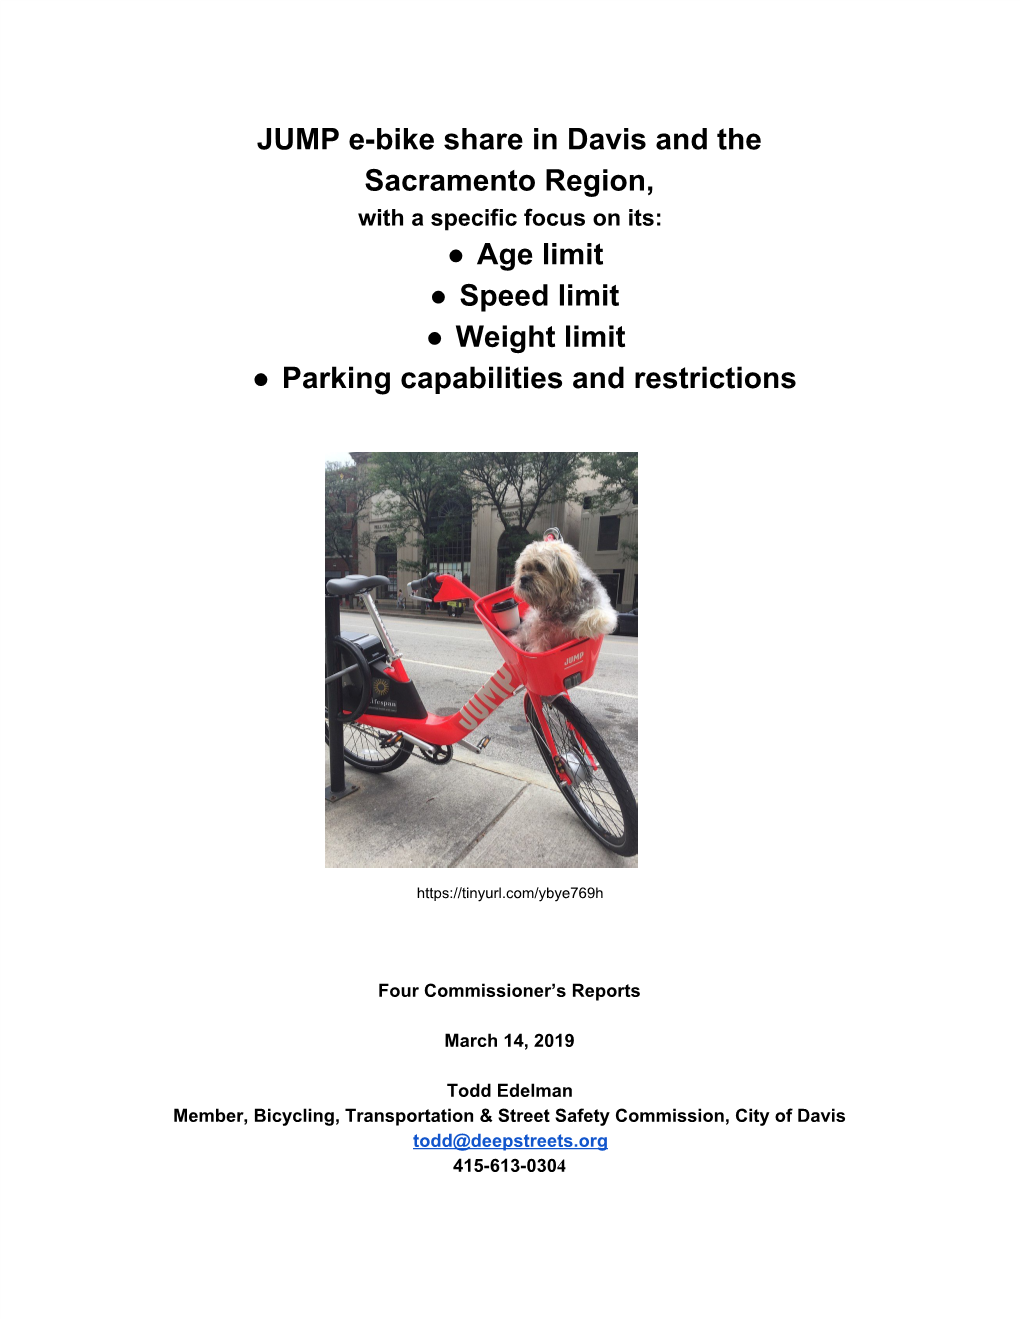 JUMP E-Bike Share in Davis and the Sacramento Region, Age Limit